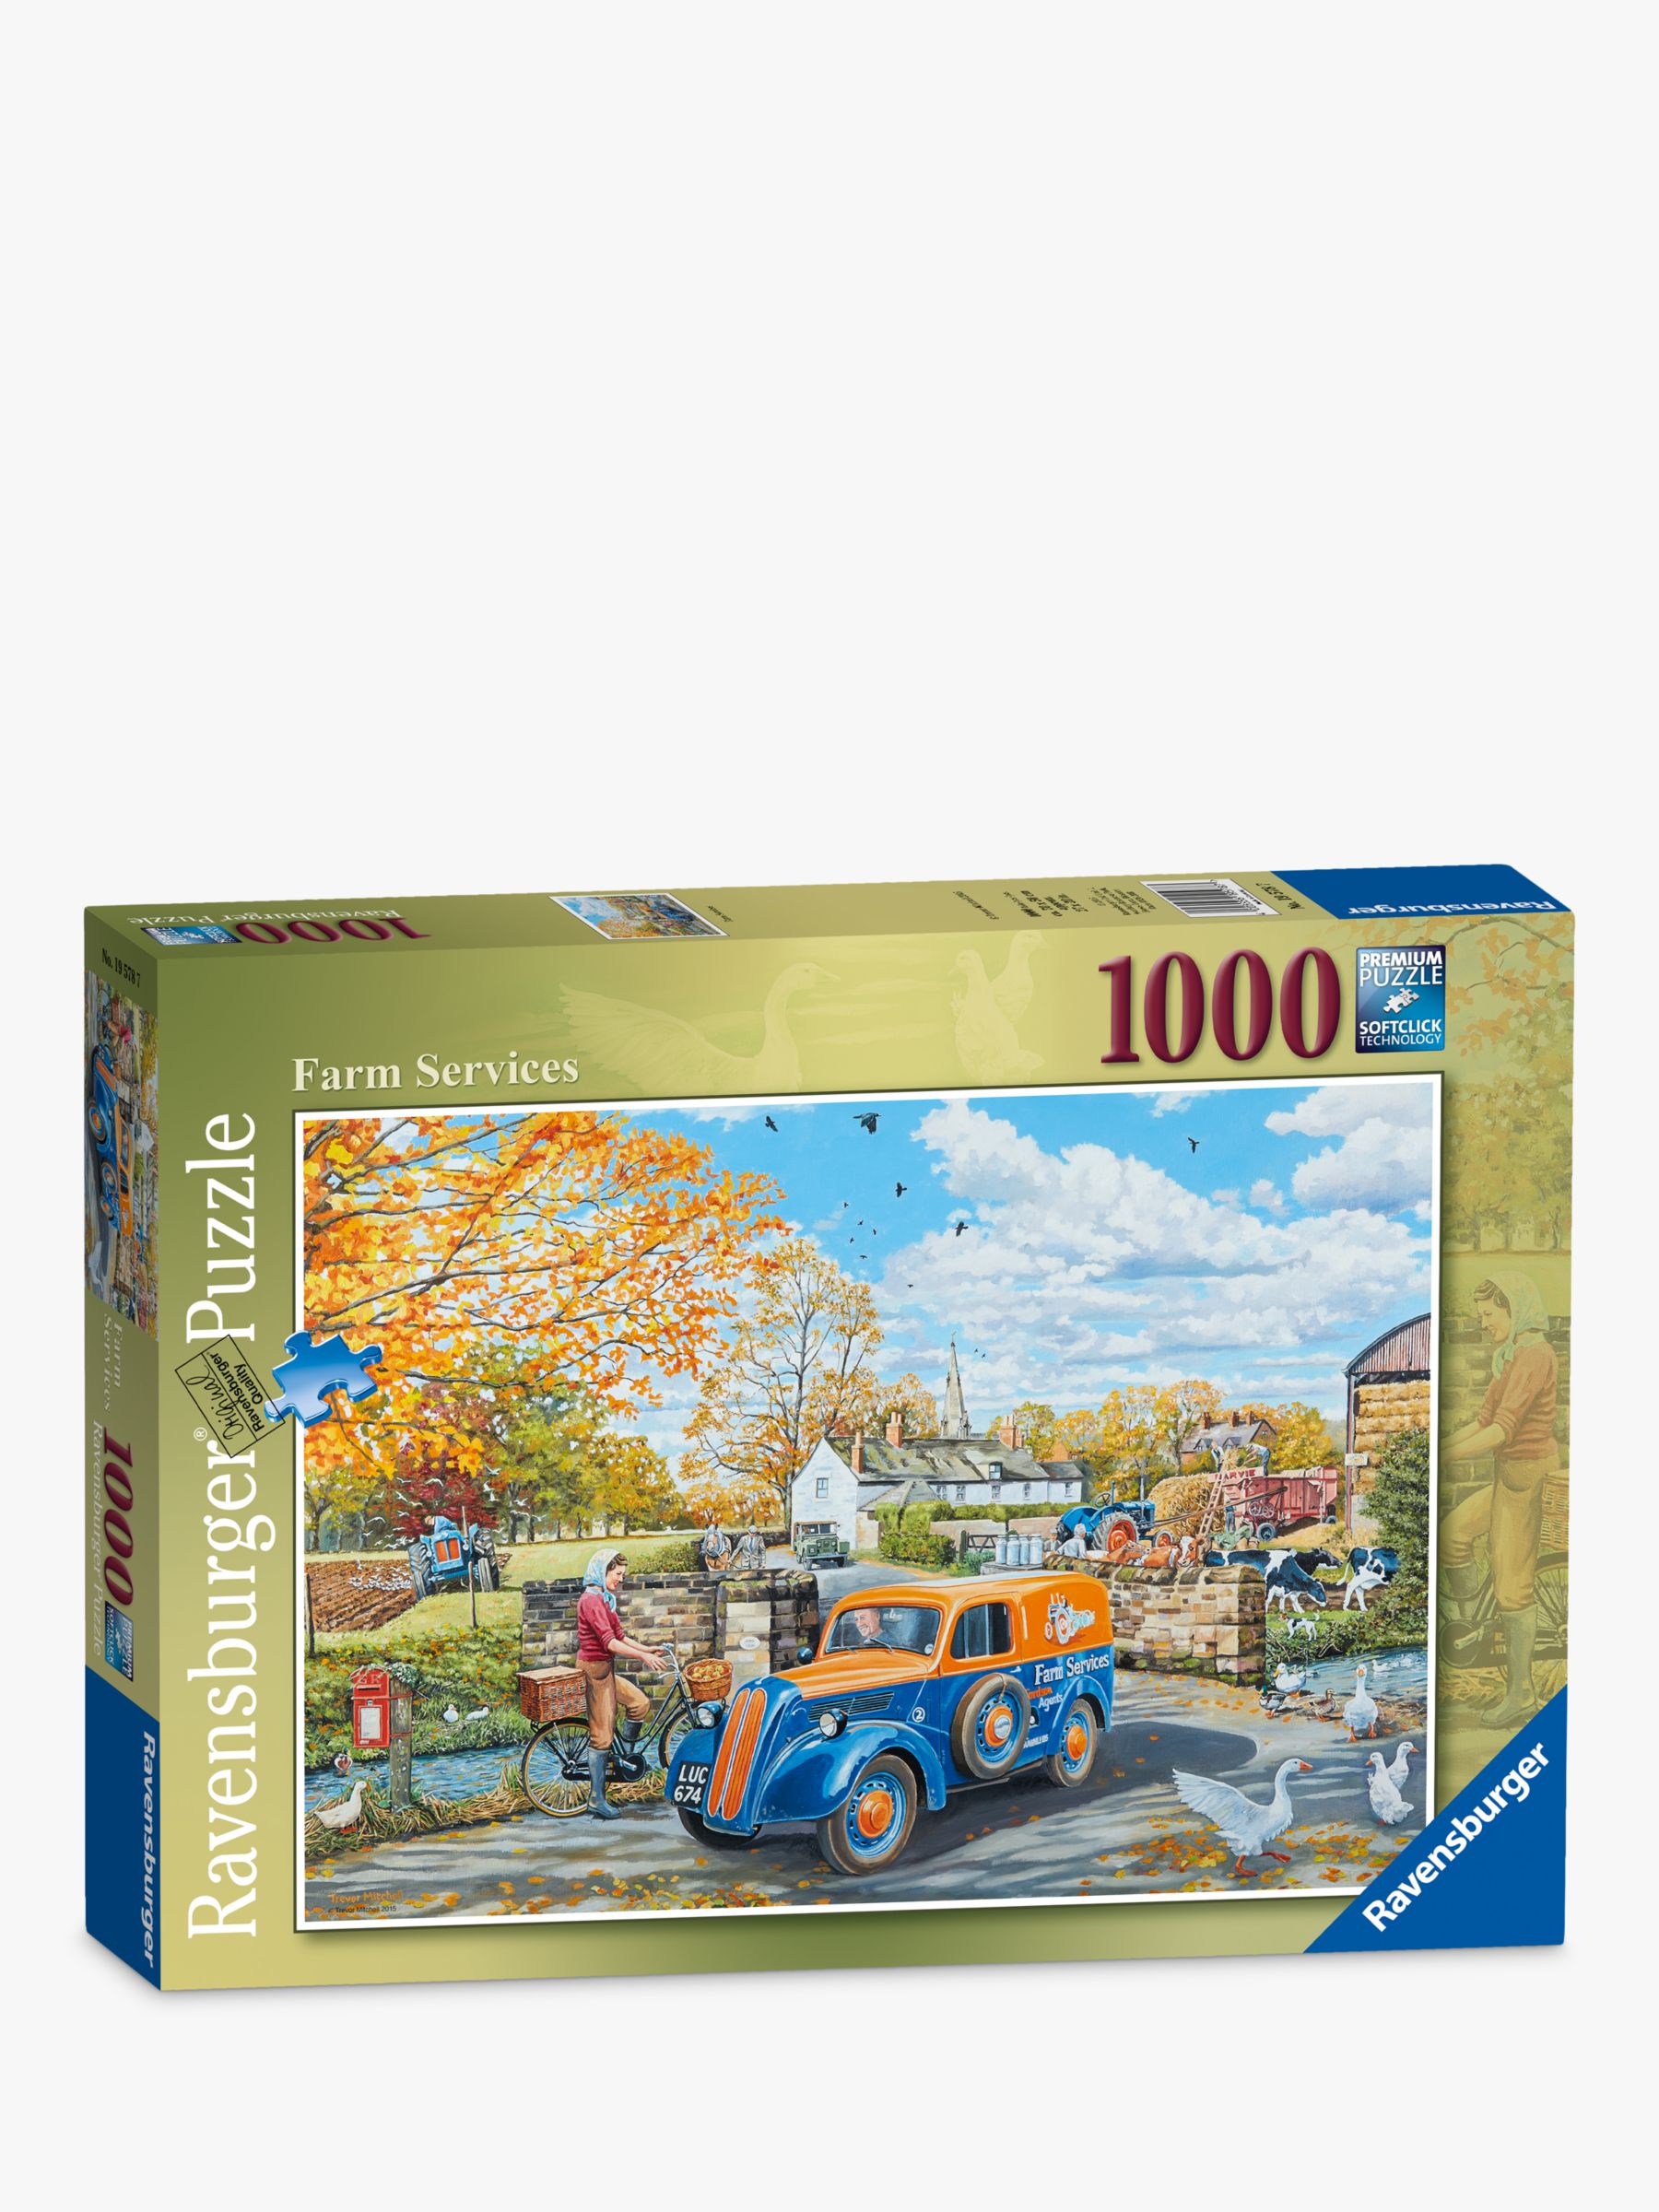 Ravensburger Farm Services Jigsaw Puzzle, 1000 Pieces at ...